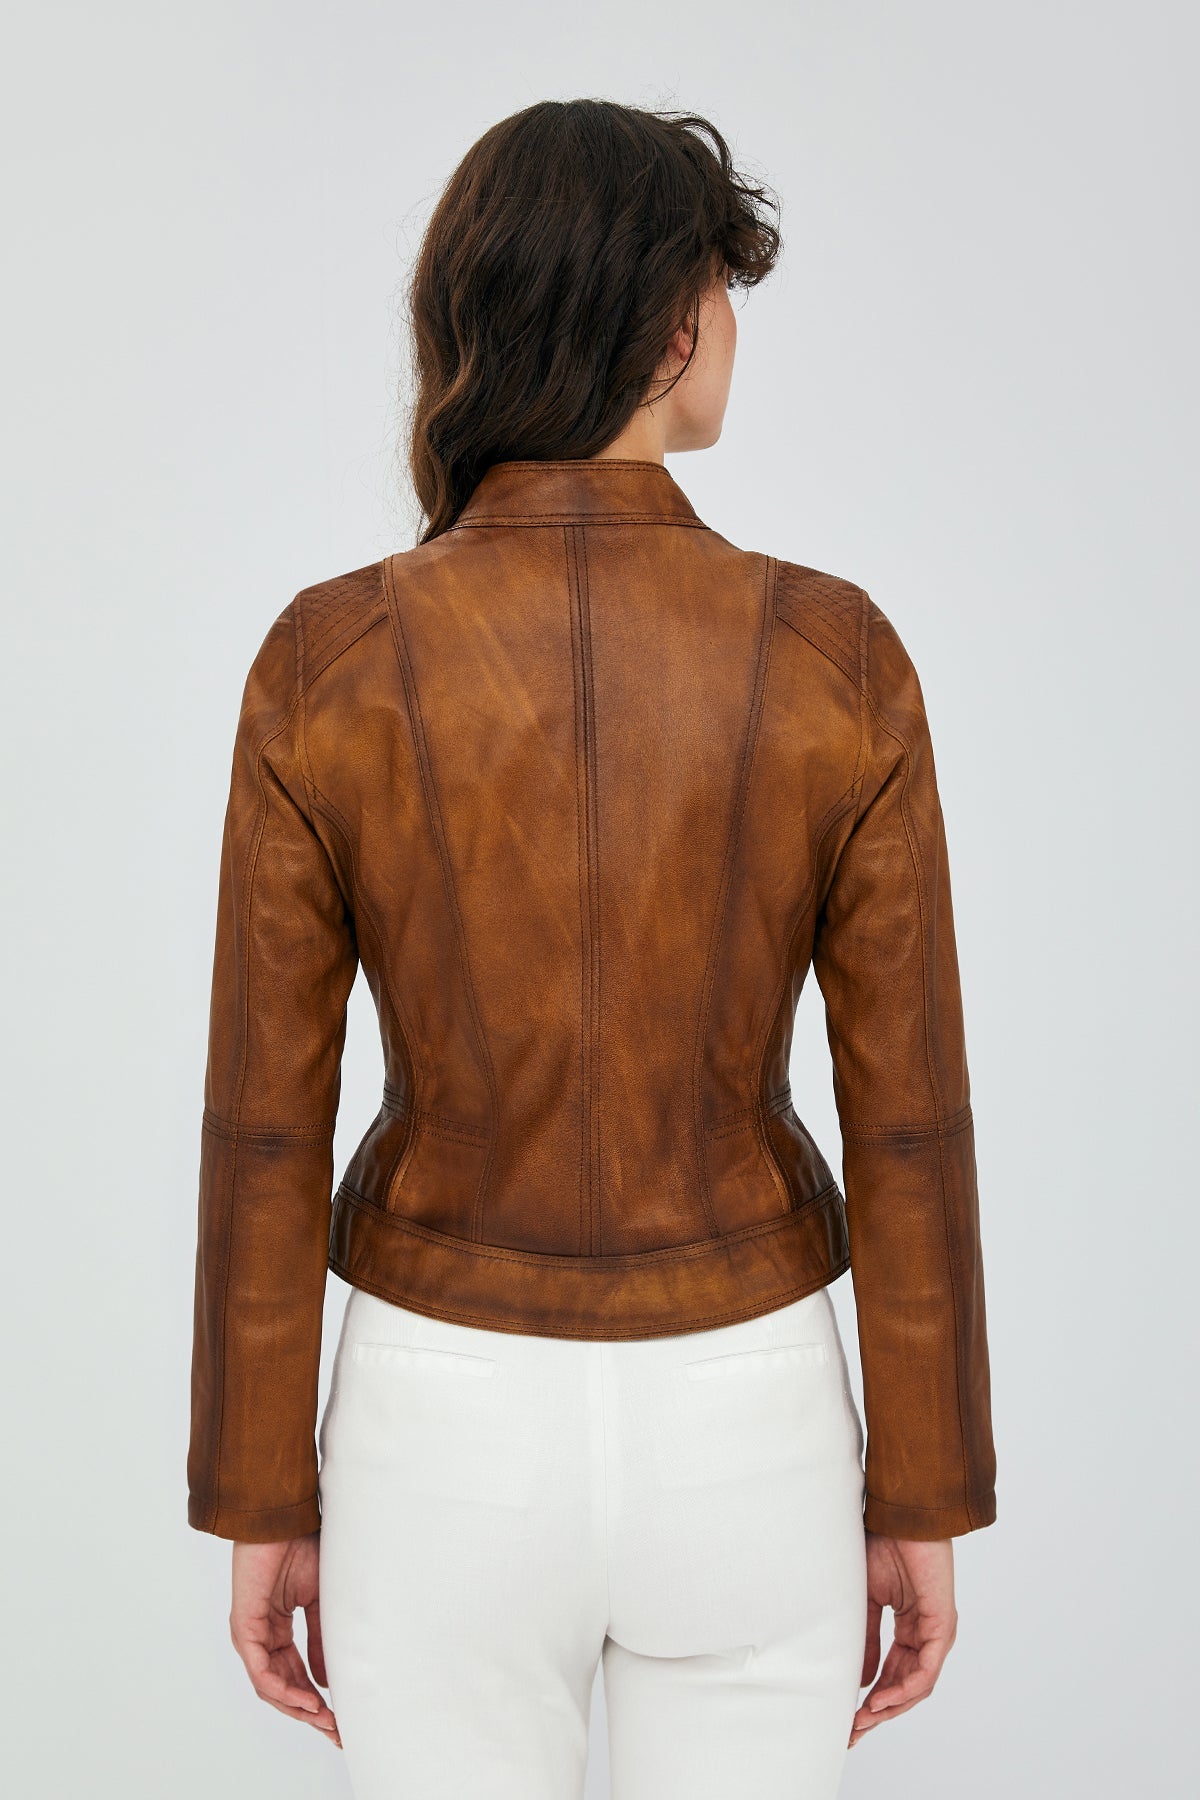 Kylie Women's Camel Leather Jacket